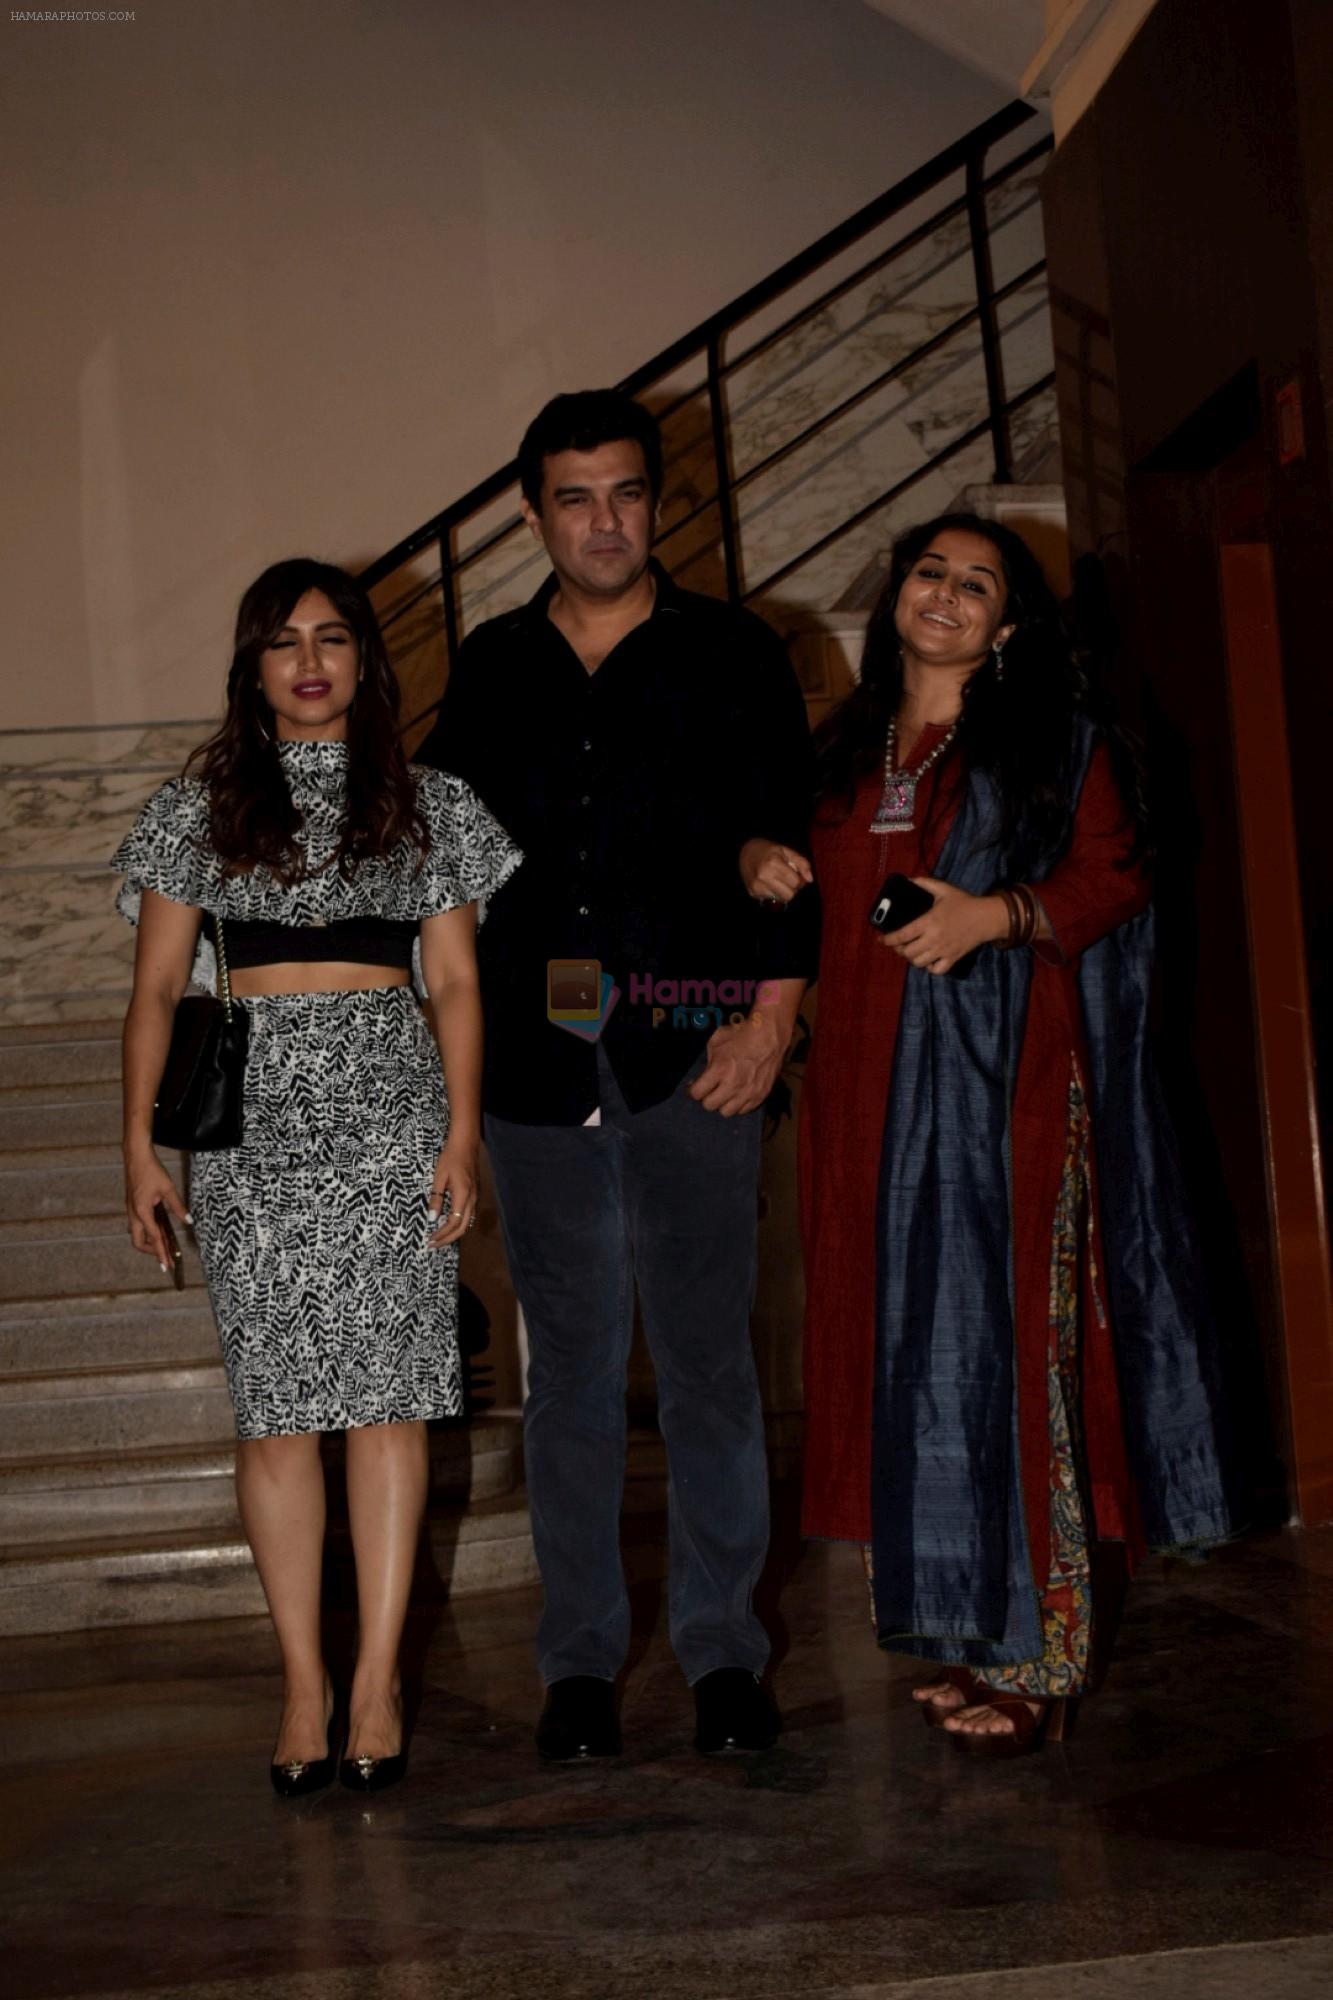 Vidya Balan, Siddharth Roy Kapoor, Bhumi Pednekar at Karwaan Pre Release Party on 26th July 2018